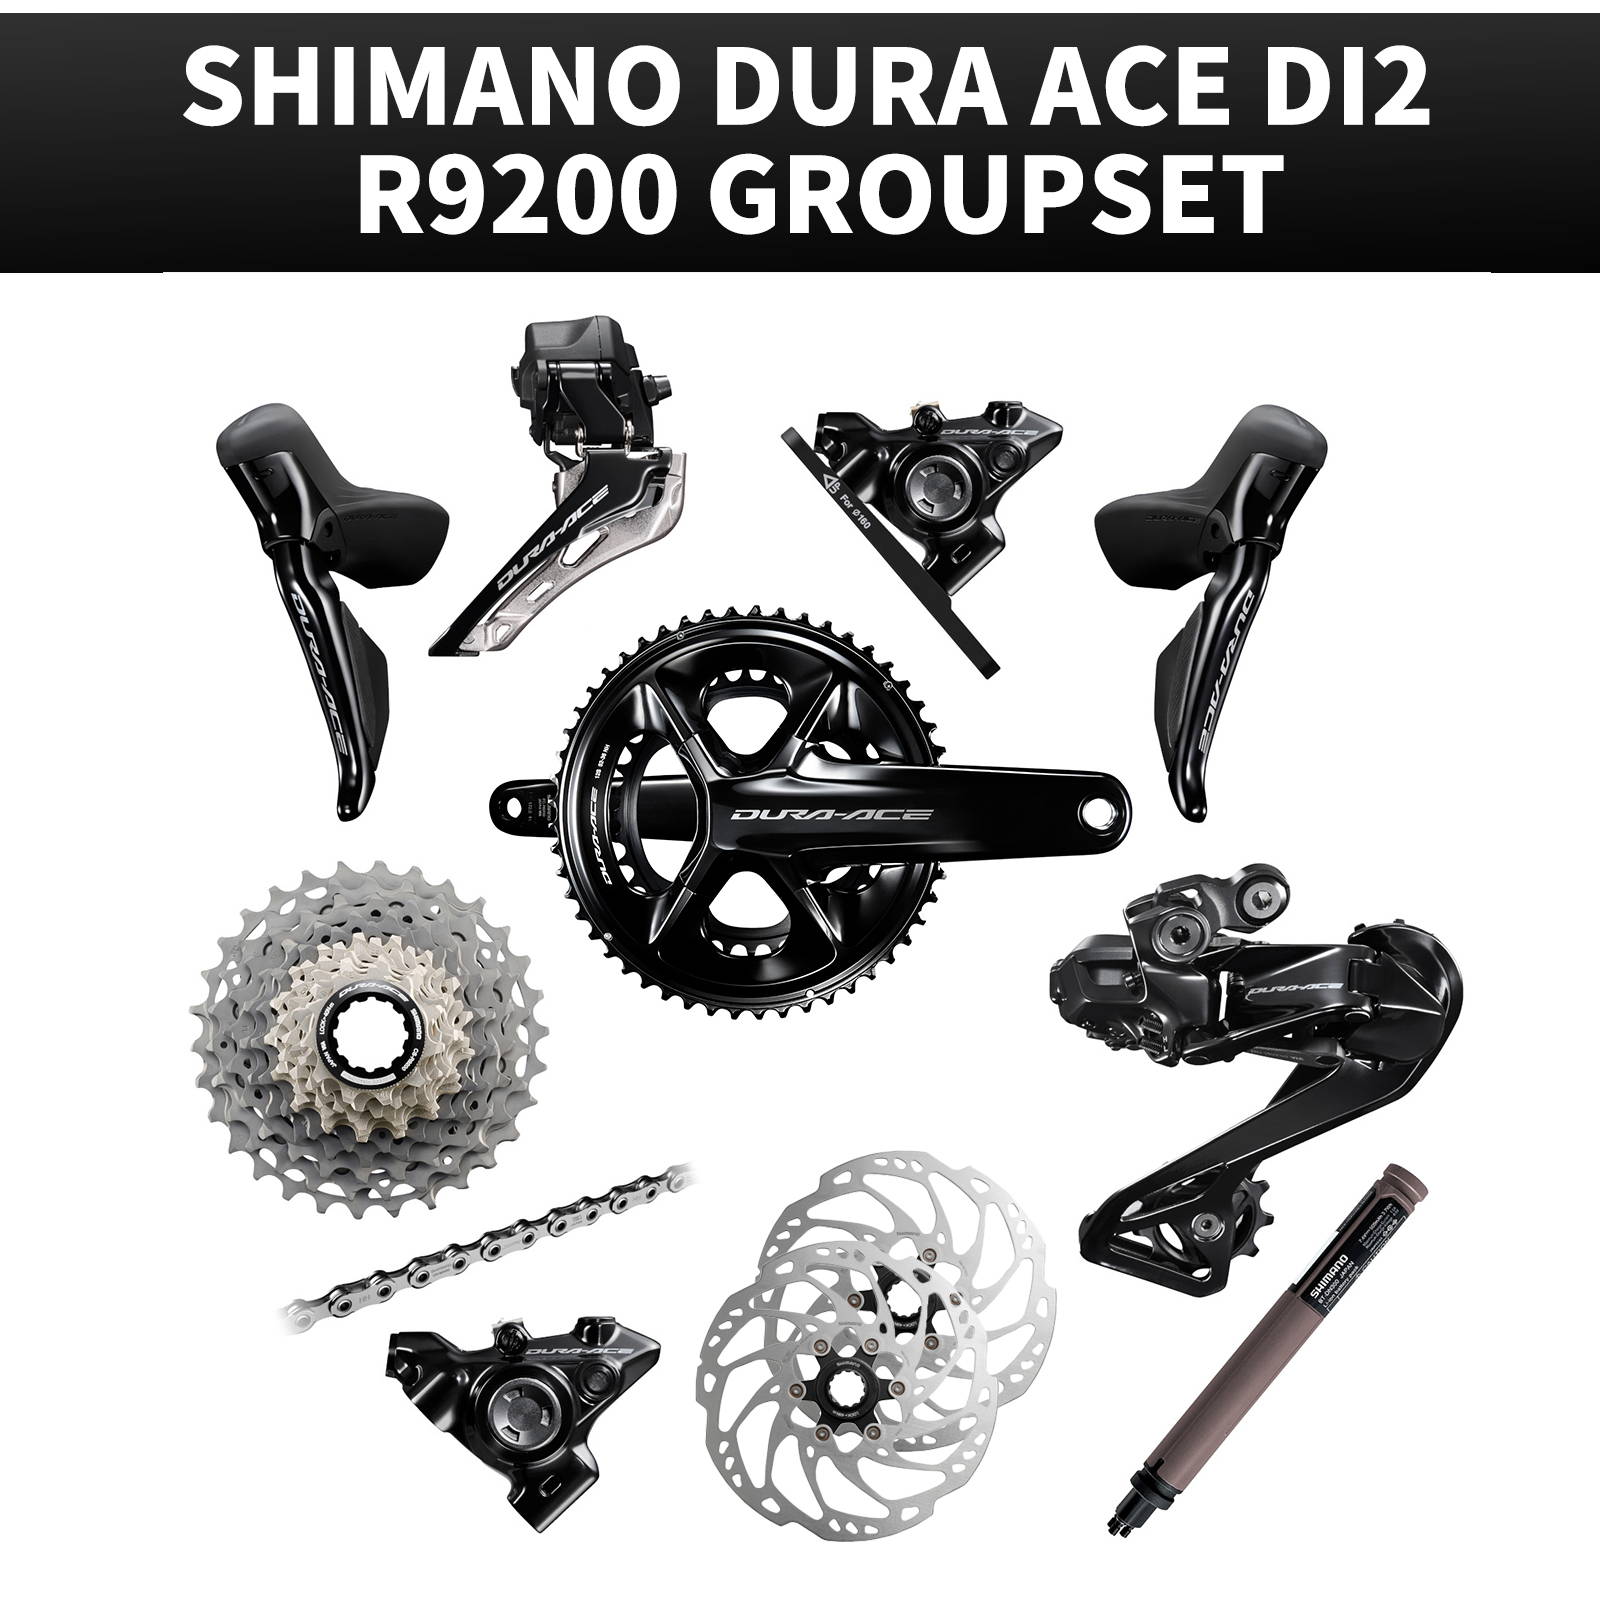 Shimano Dura Ace Di2 R9200 groupset